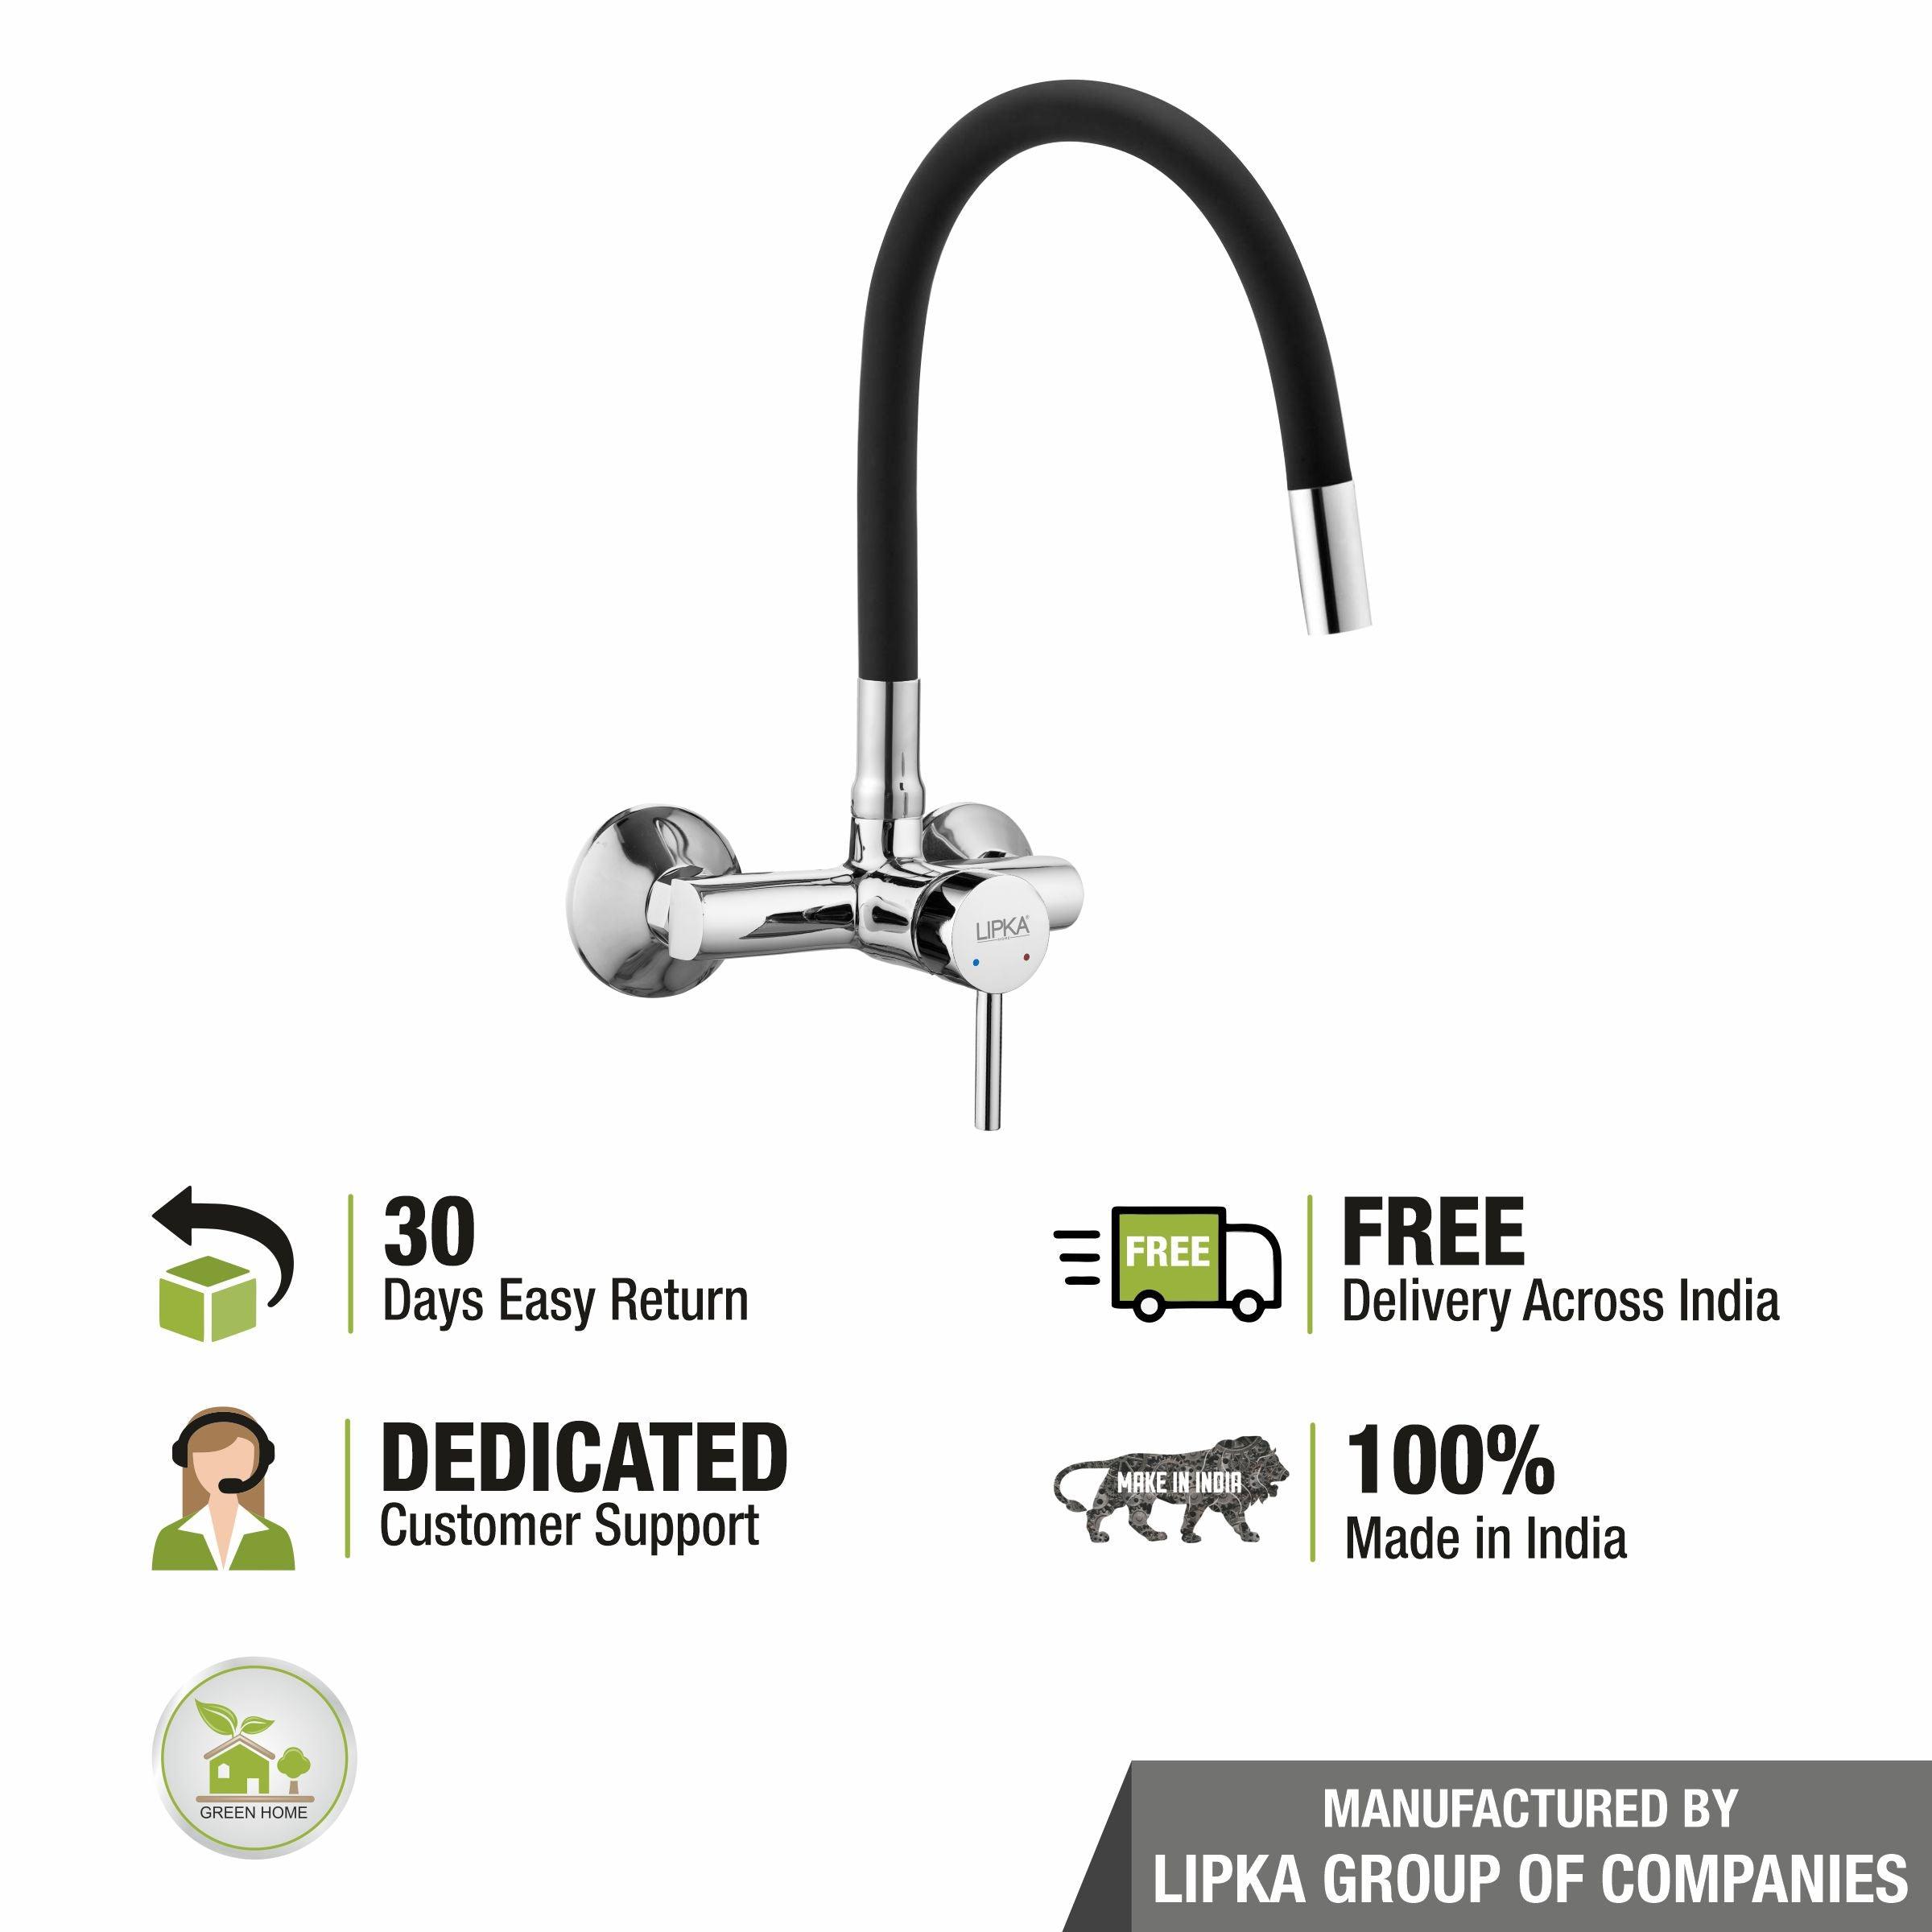 Kyron Single Lever Sink Mixer with Black Flexible Silicone Spout (20 Inches) - LIPKA - Lipka Home